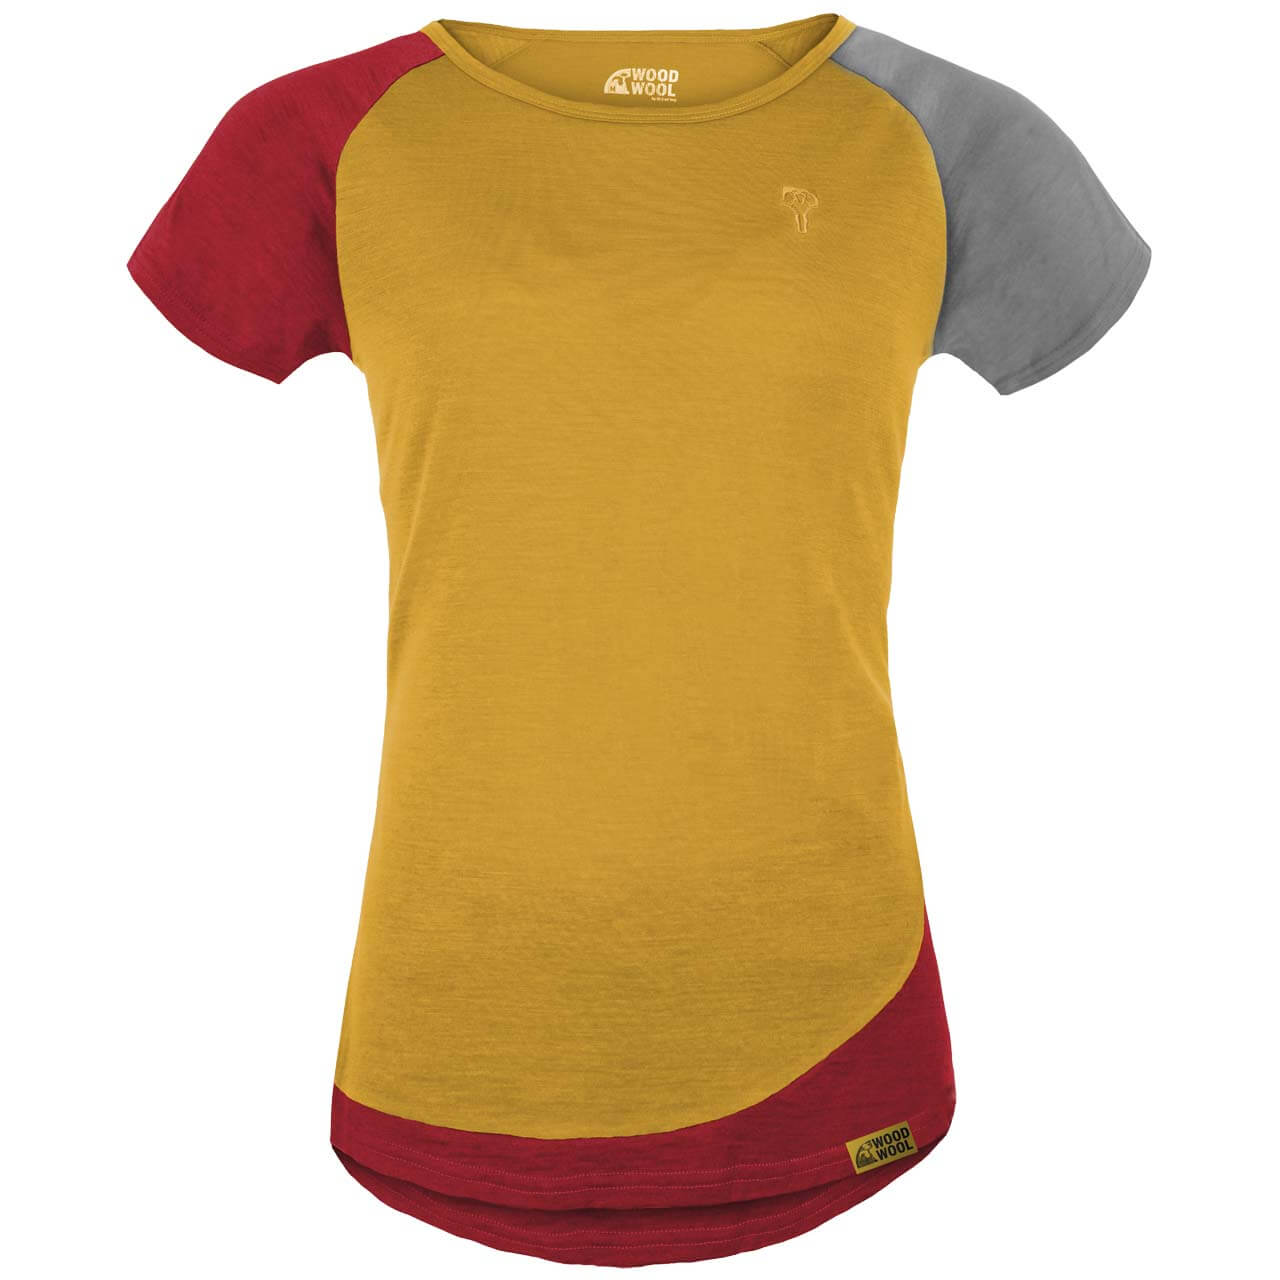 Grüezi Bag WoodWool Janeway T-Shirt - Daisy Daze Yellow, L von Grüezi Bag